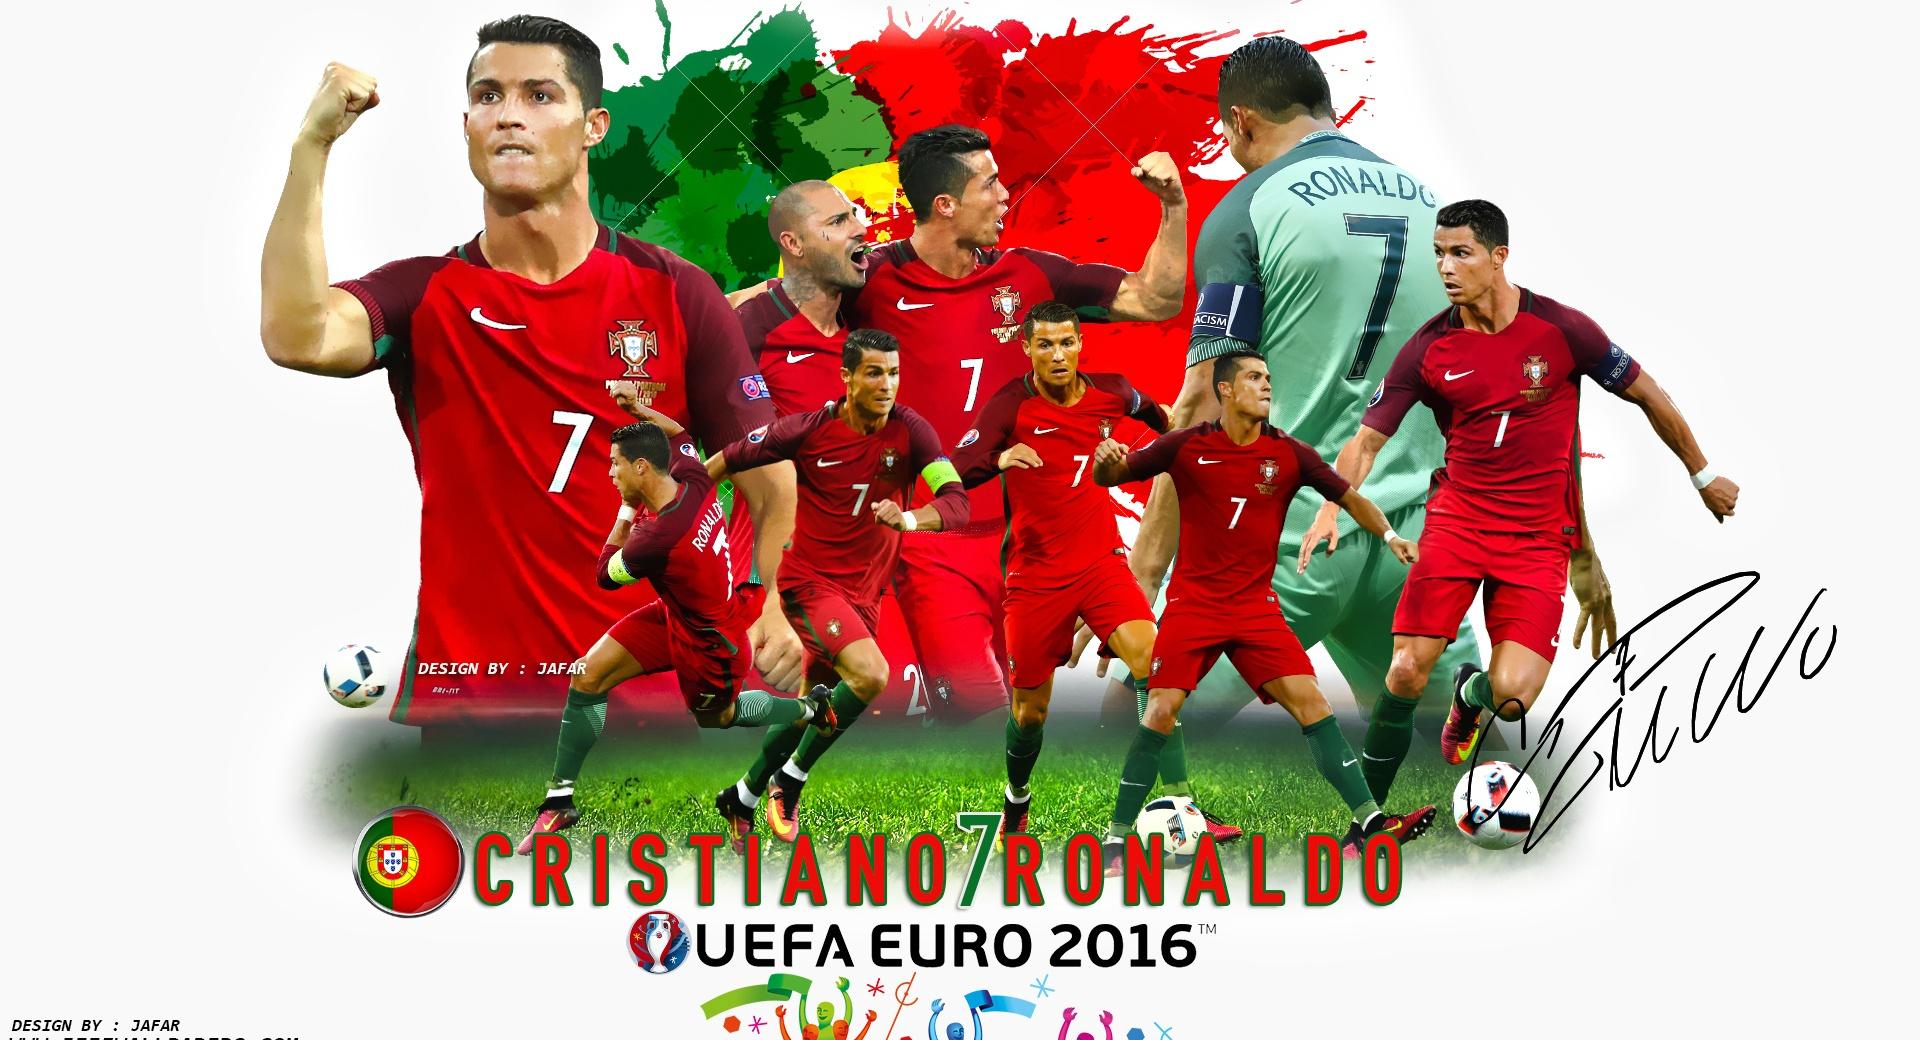 CRISTIANO RONALDO EURO 2016 wallpapers HD quality